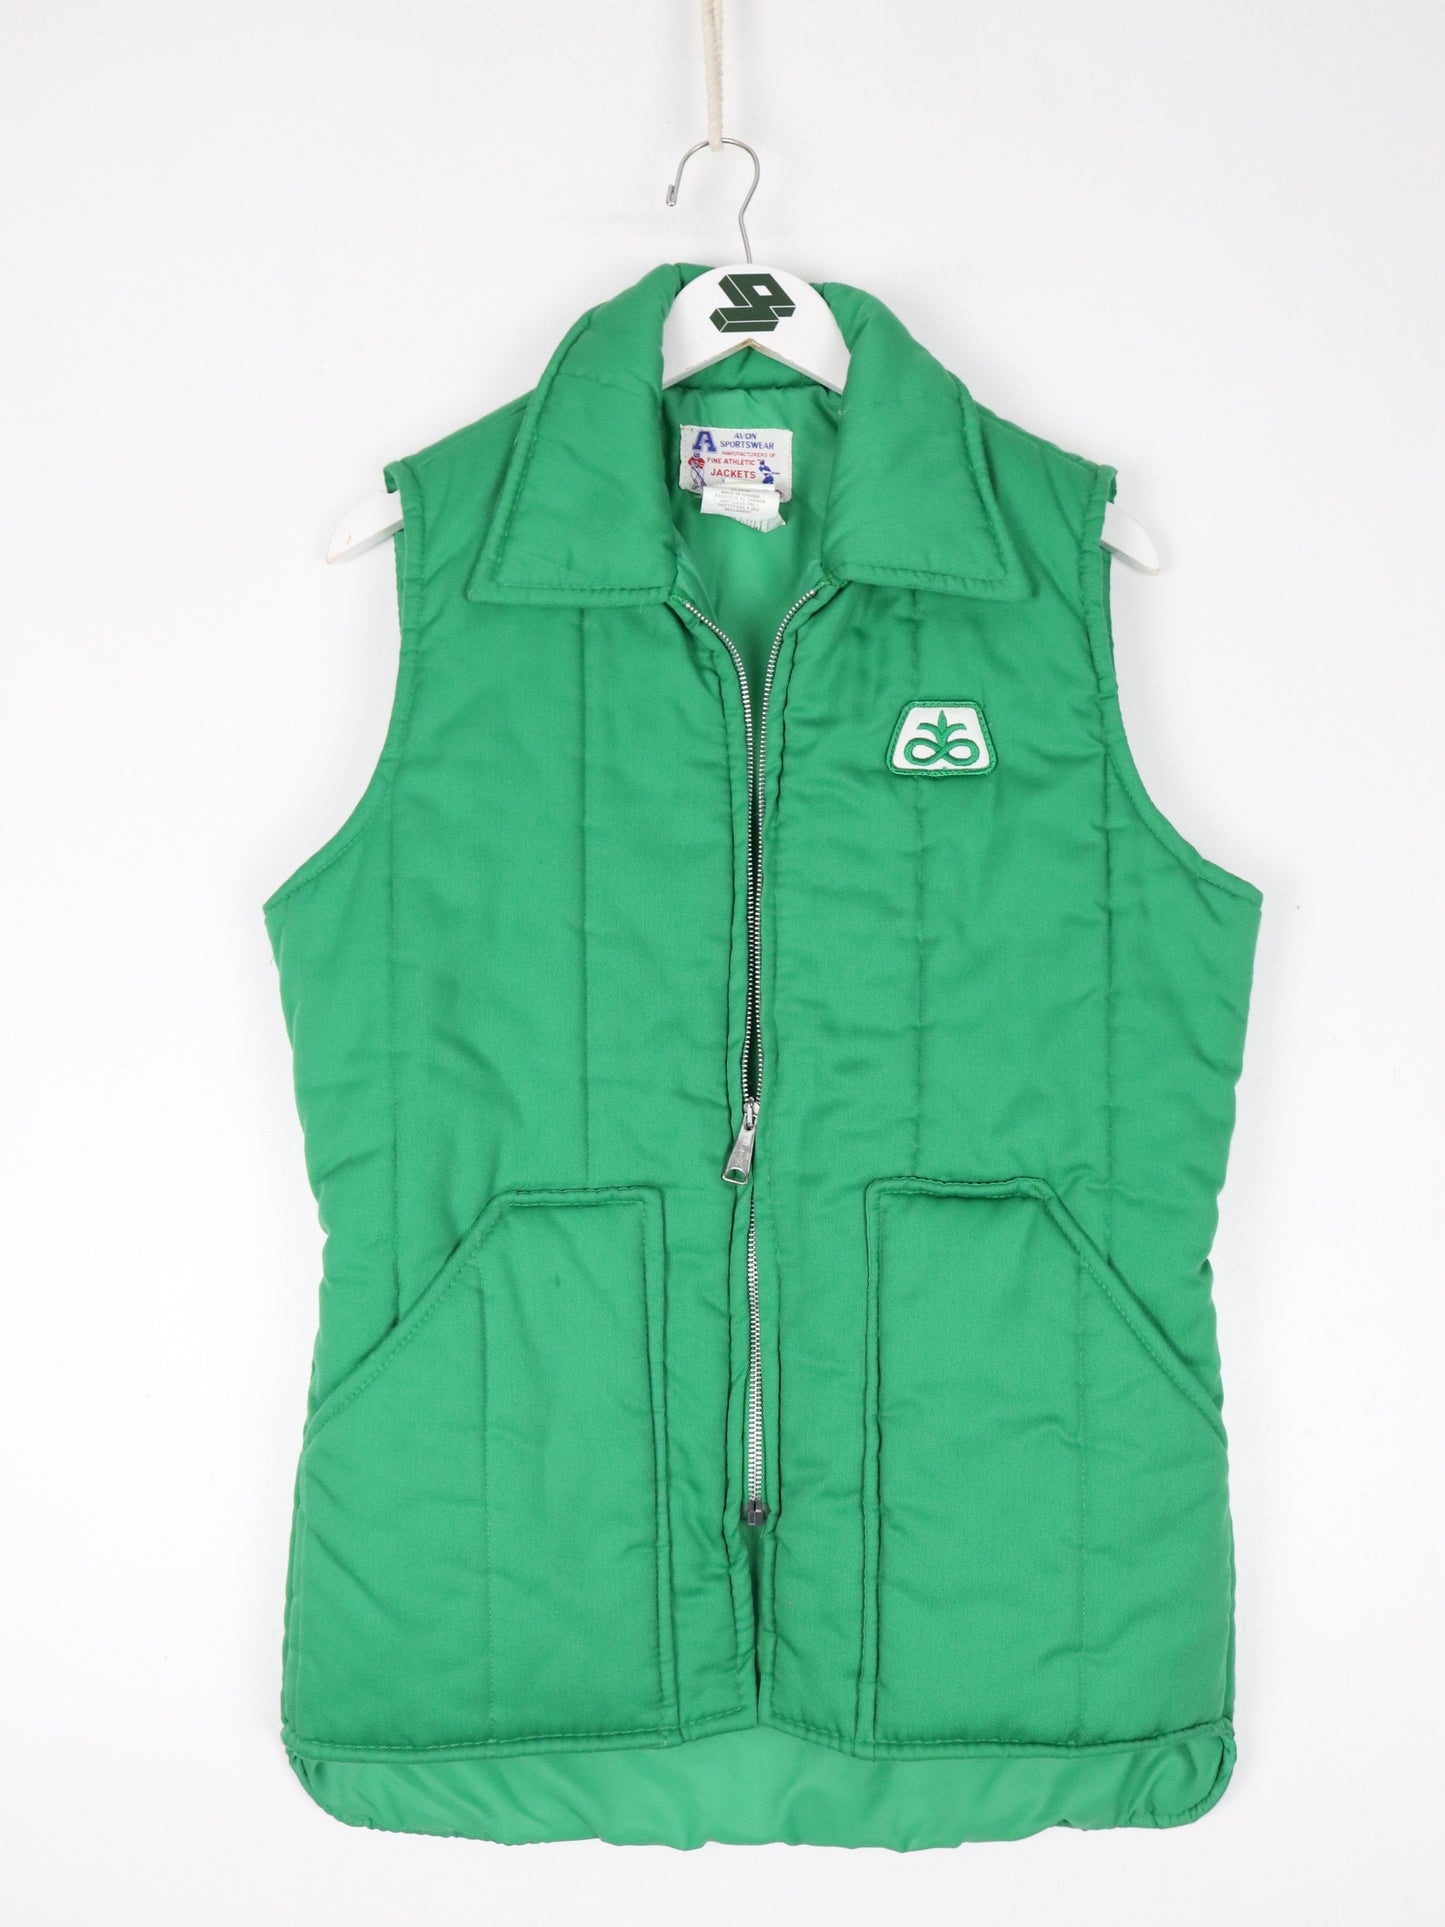 Vintage Avon Sportswear Vest Mens Small Green Jacket